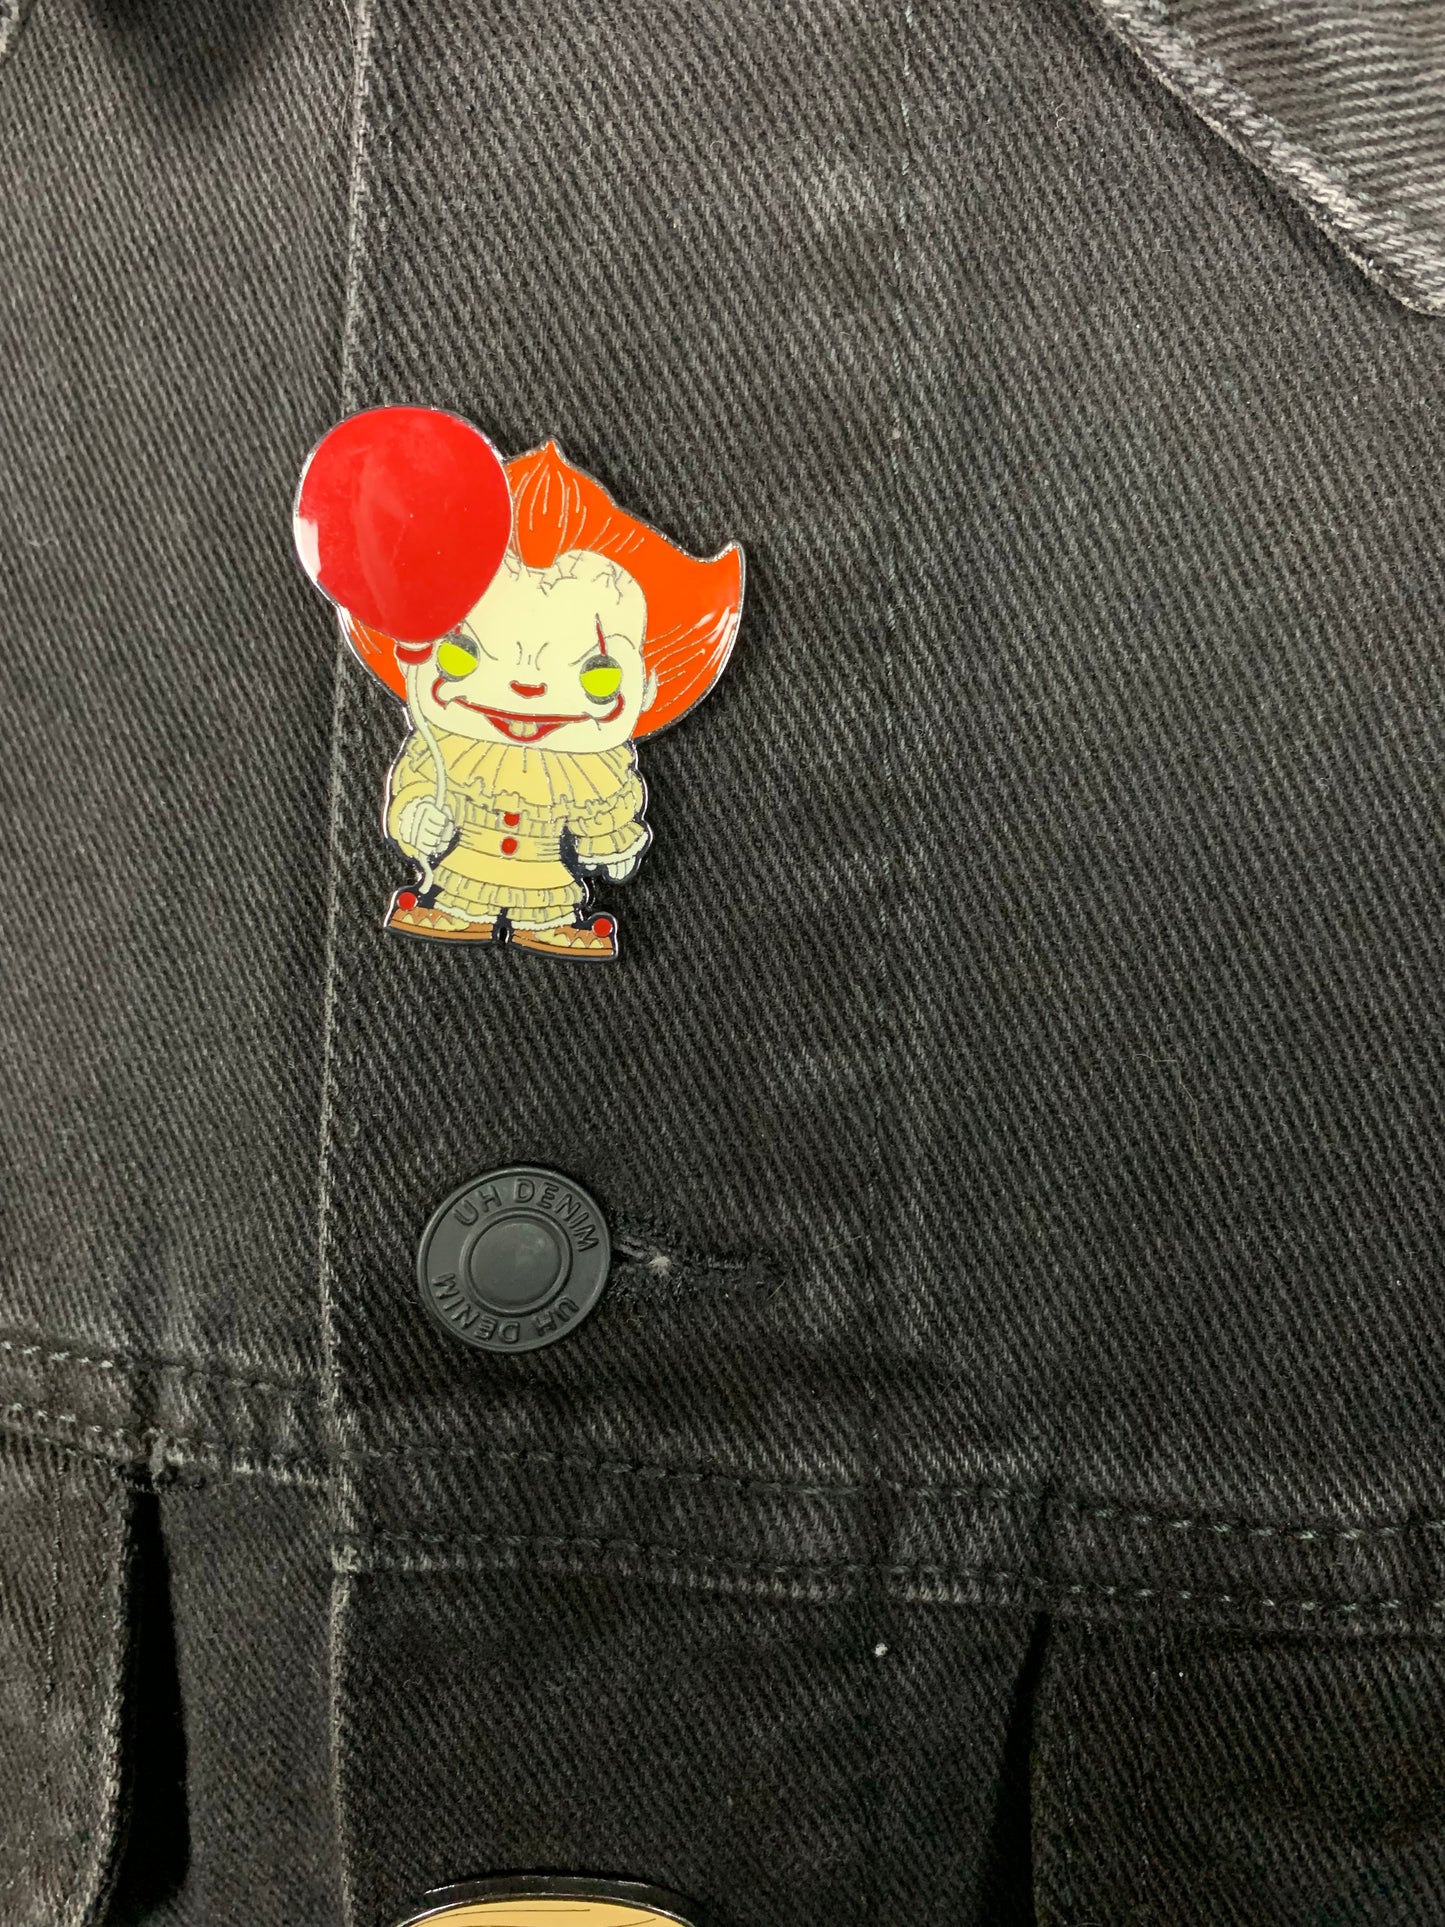 Pennywise the Clown “IT” Denim Vest Custom Rework L